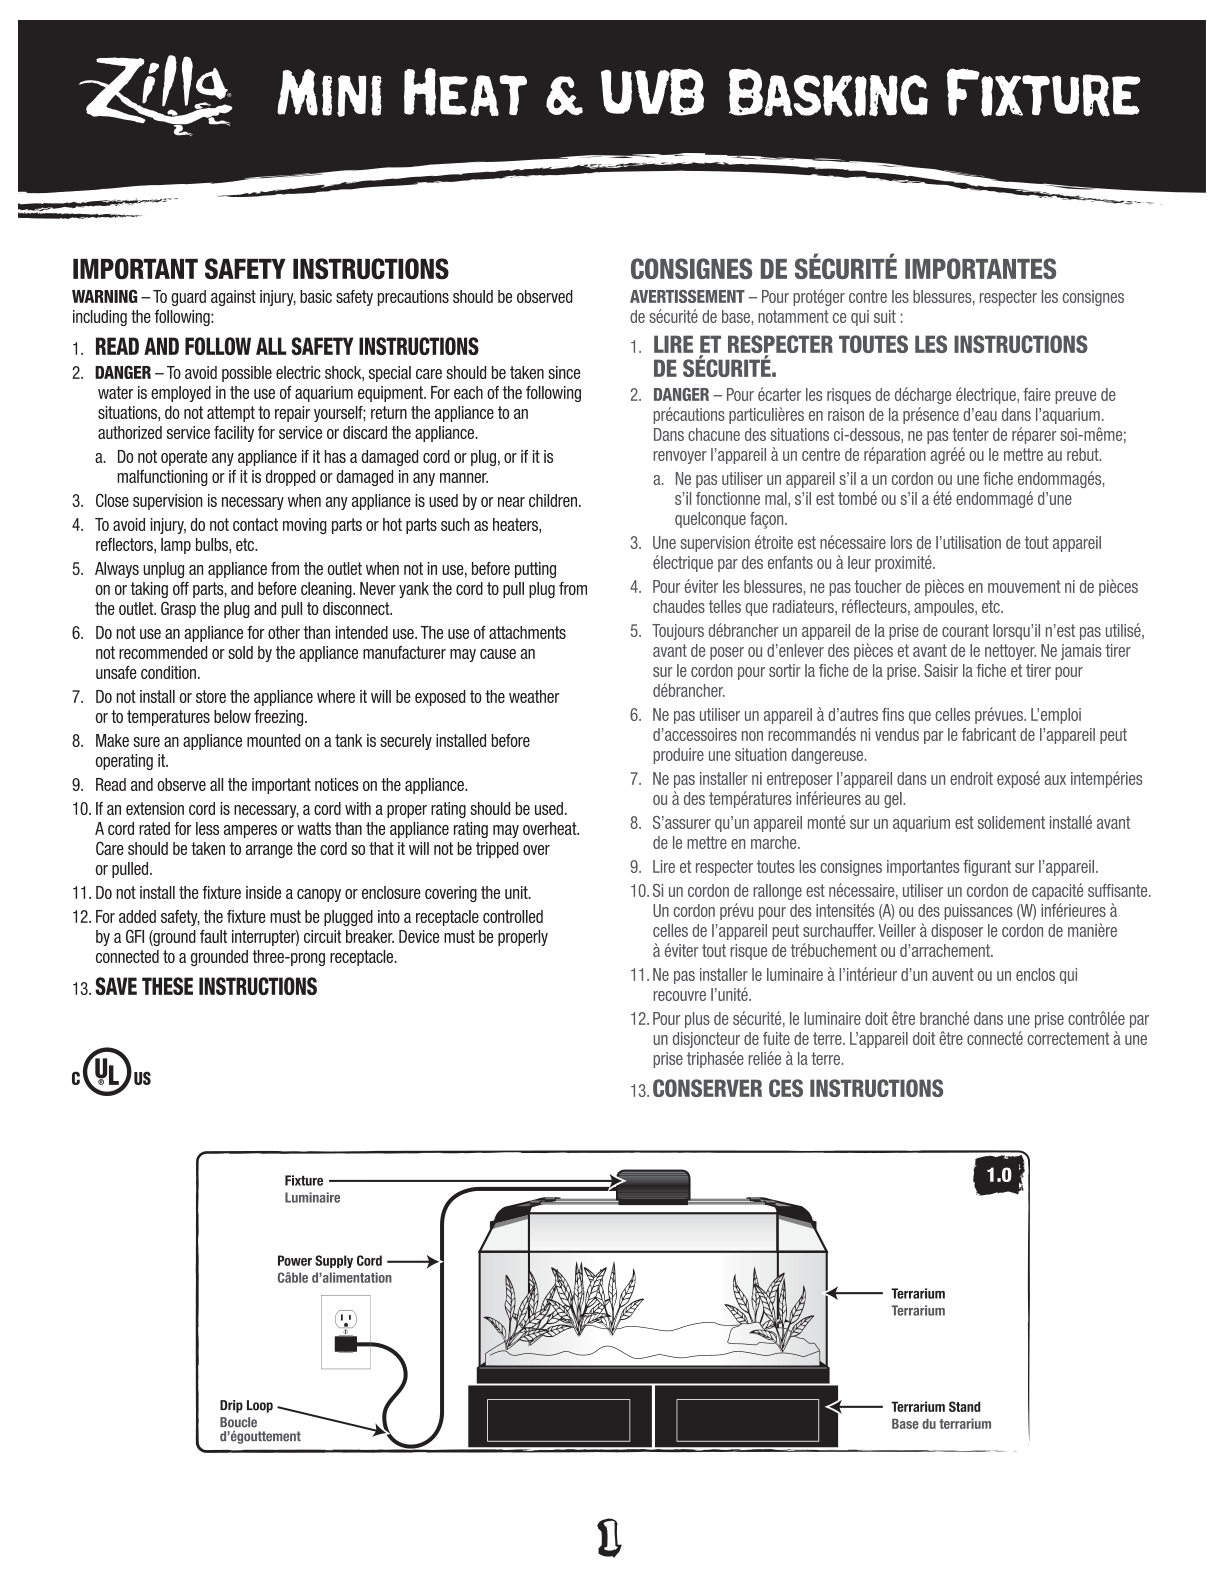 Zilla Mini Heat & UVB Basking Fixture Instructions